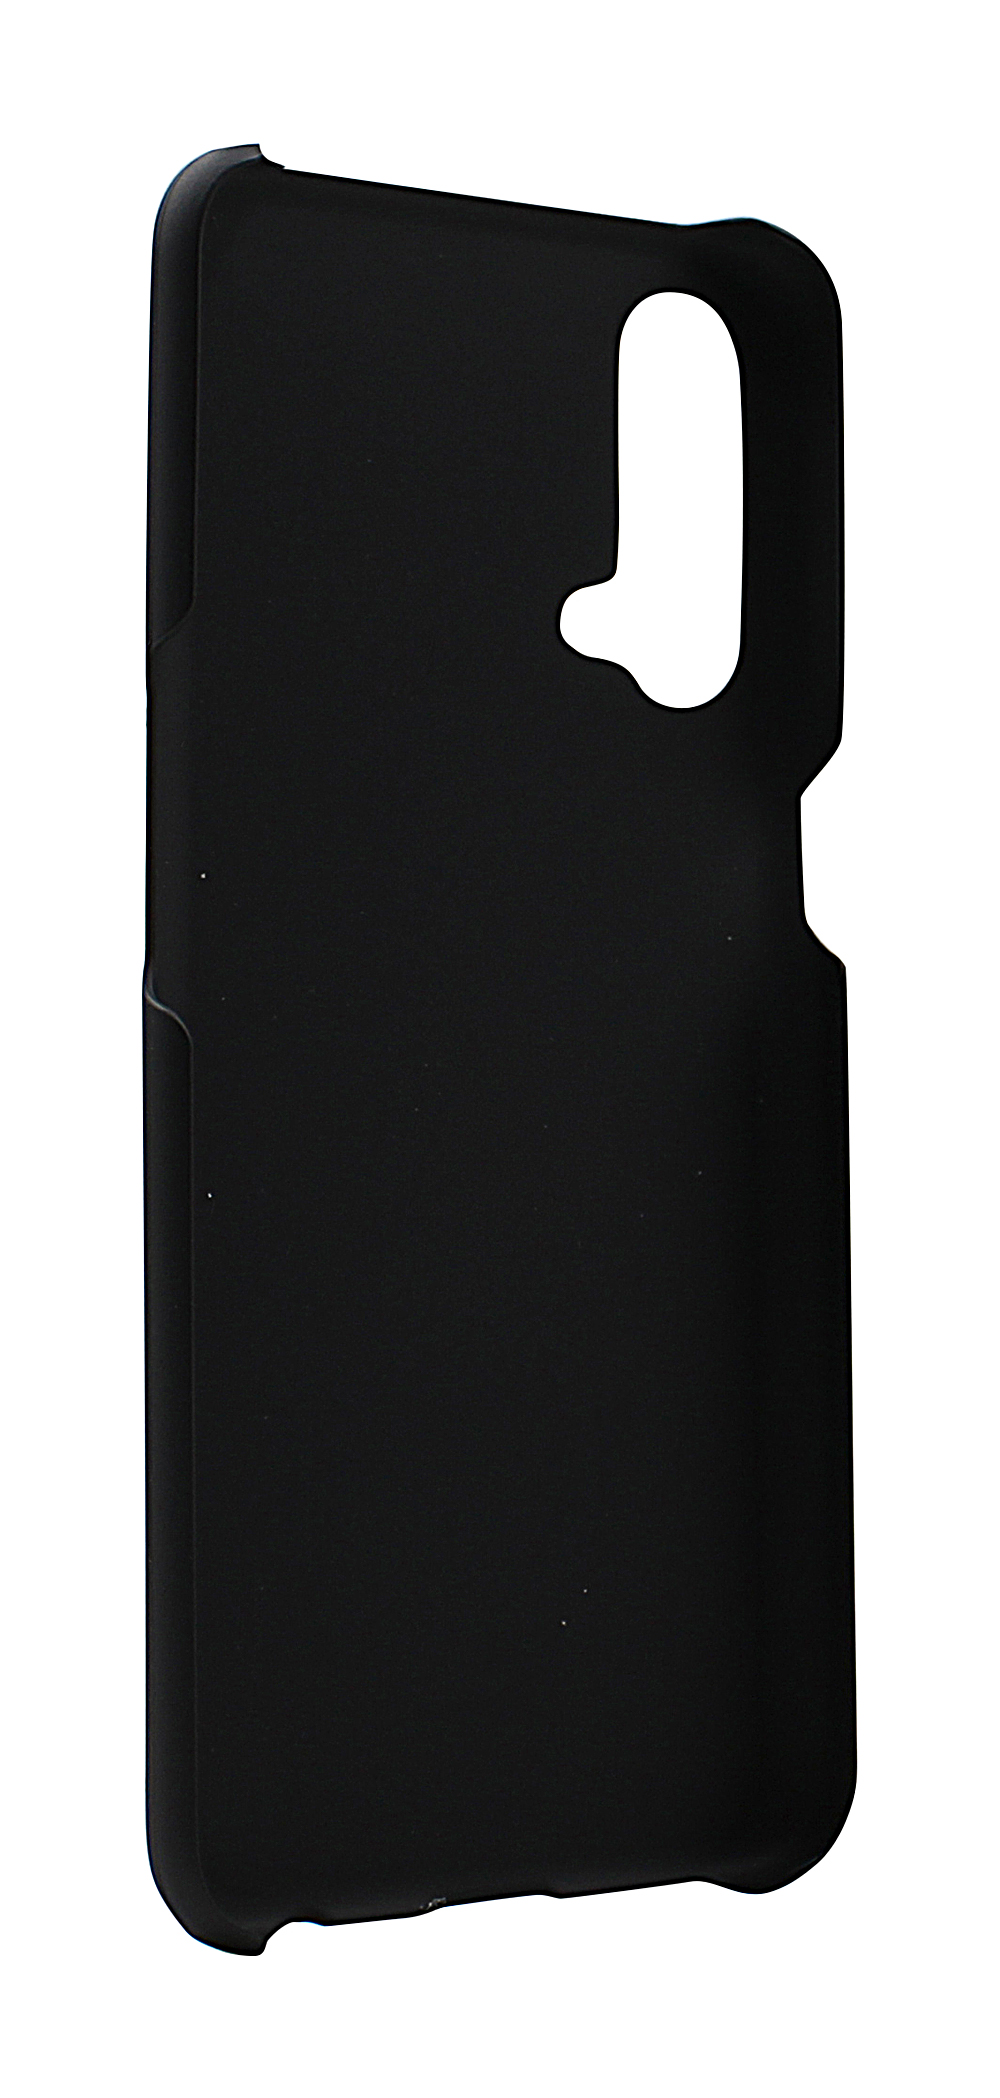 Skimblocker Magnet Designwallet OnePlus Nord CE 5G